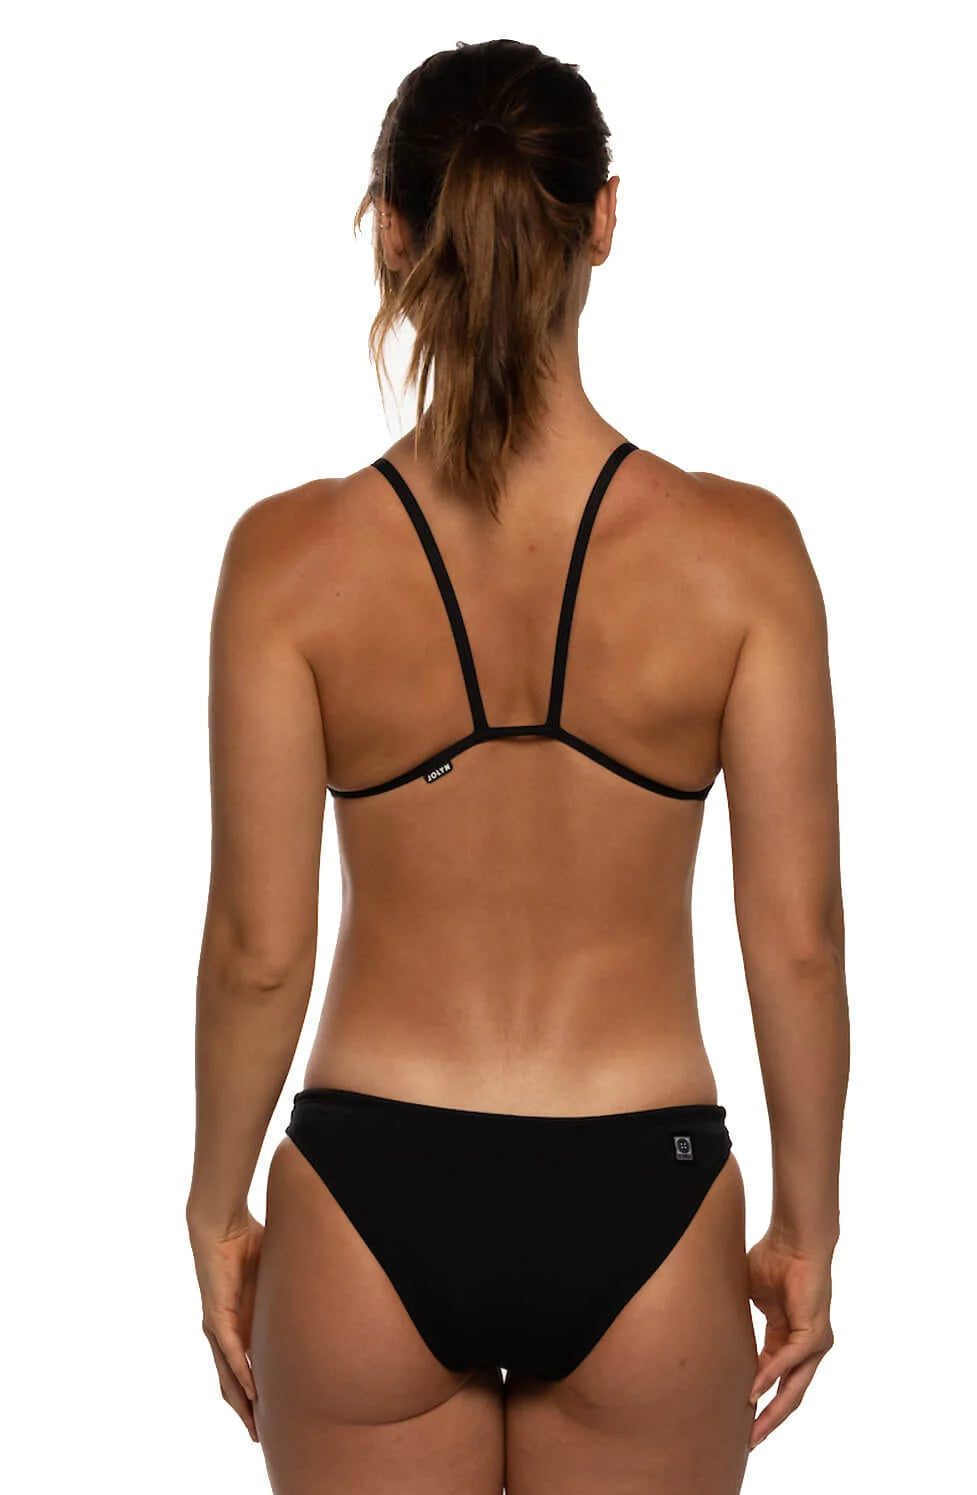 Female Training Suit - Jolyn Midl Bikini Bottom